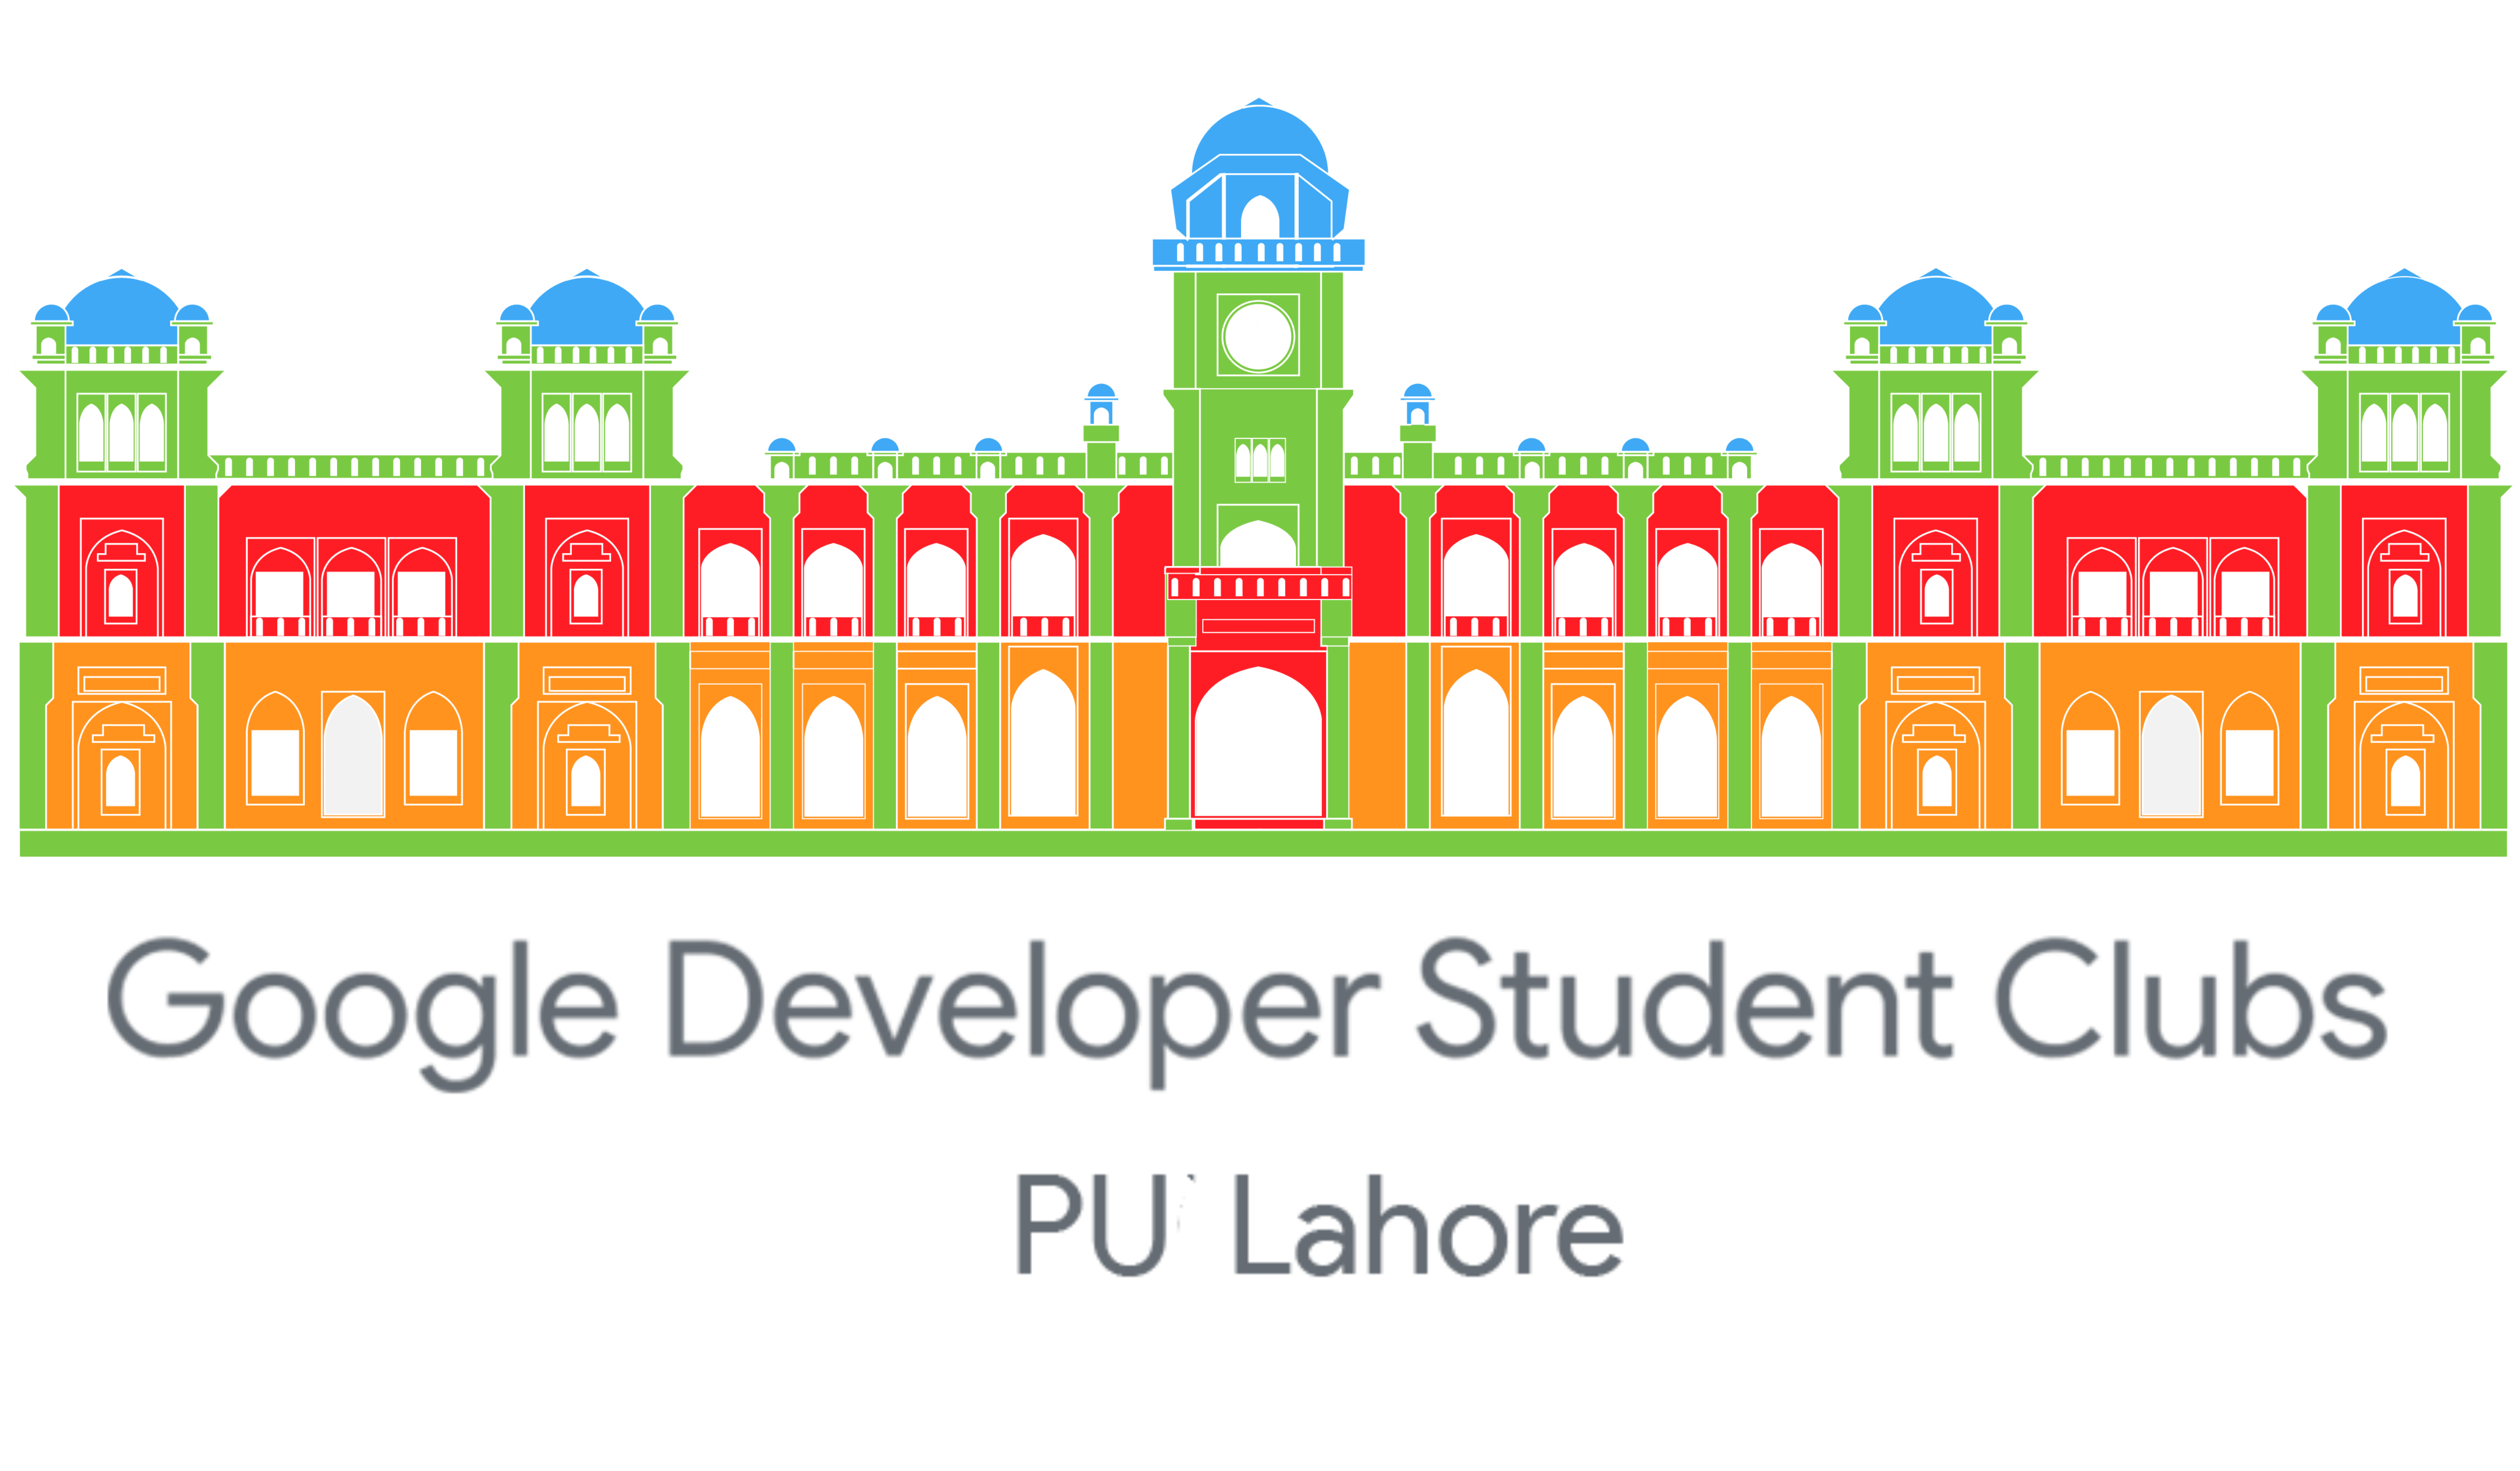 University of the Punjab, Lahore logo